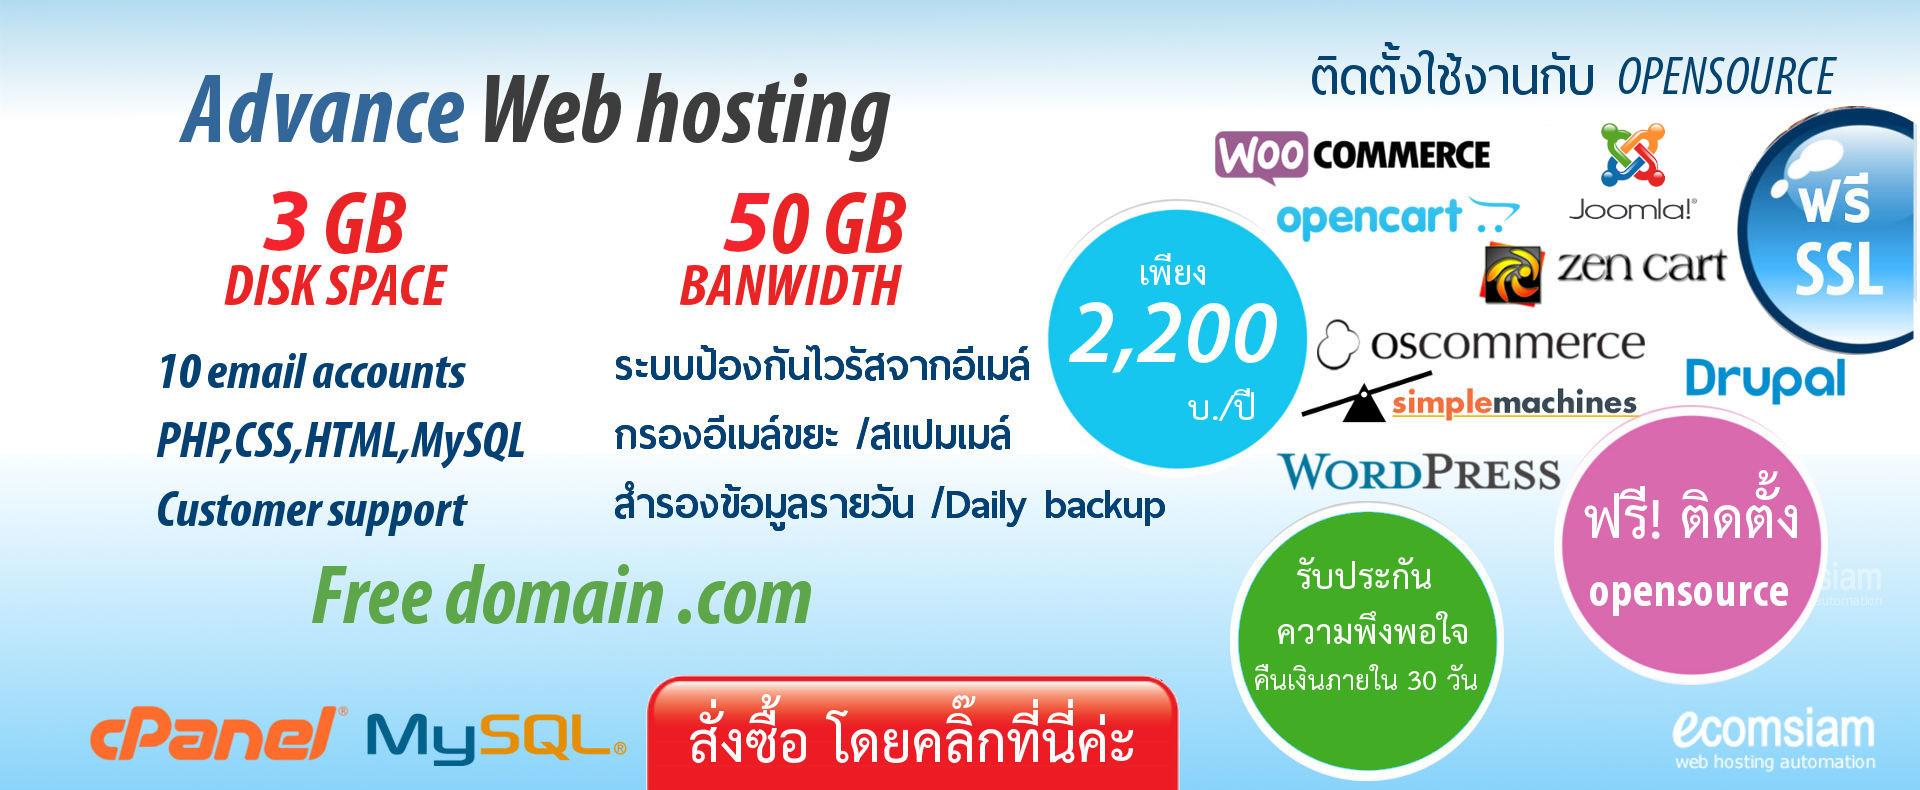 Advance hosting thailand ไทย เพียง 2200 บาทต่อปี ฟรีโดเมนเนม ฟรี SSL ใช้งาน php,MySQL database ฟรีติดตั้ง opensource wordpress joomla zencart oscommerce ...